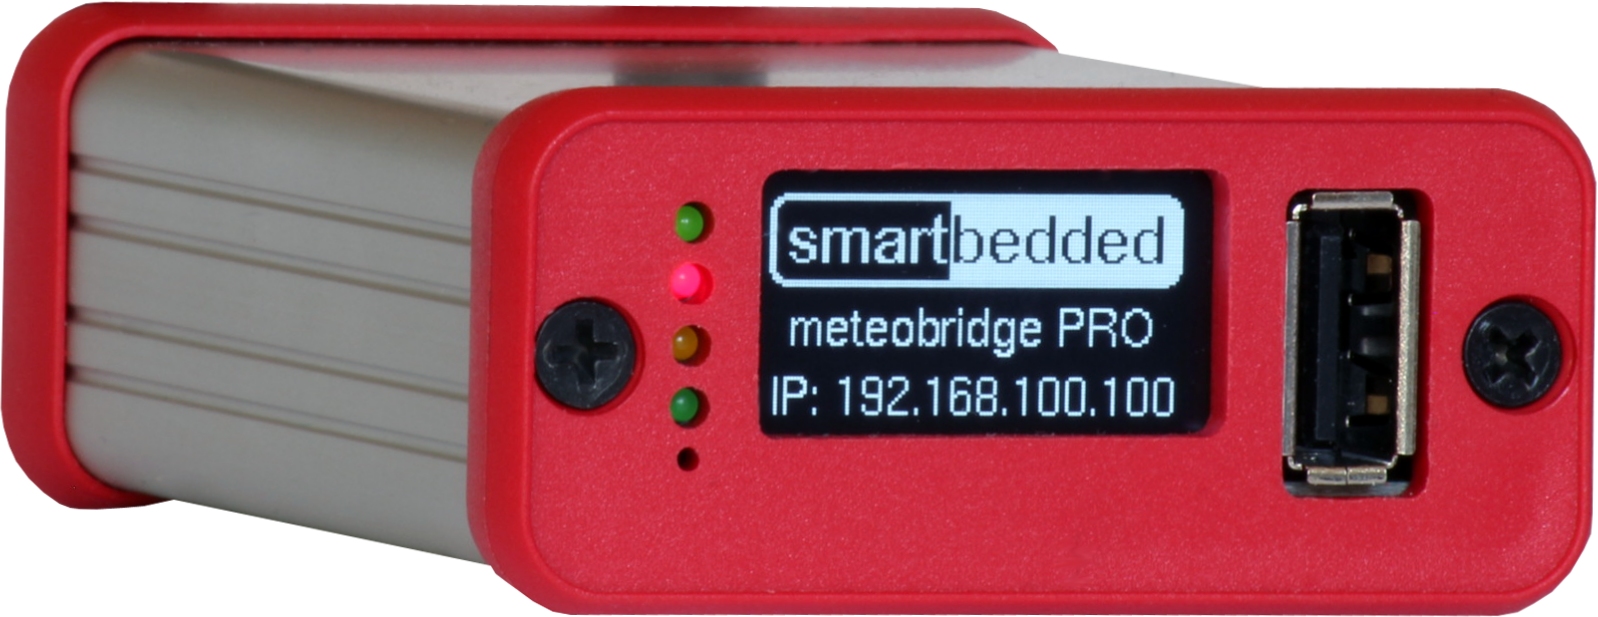 WH-MB2VPro-pack Meteobridge Pro2 met VP2 sensor keuze pack